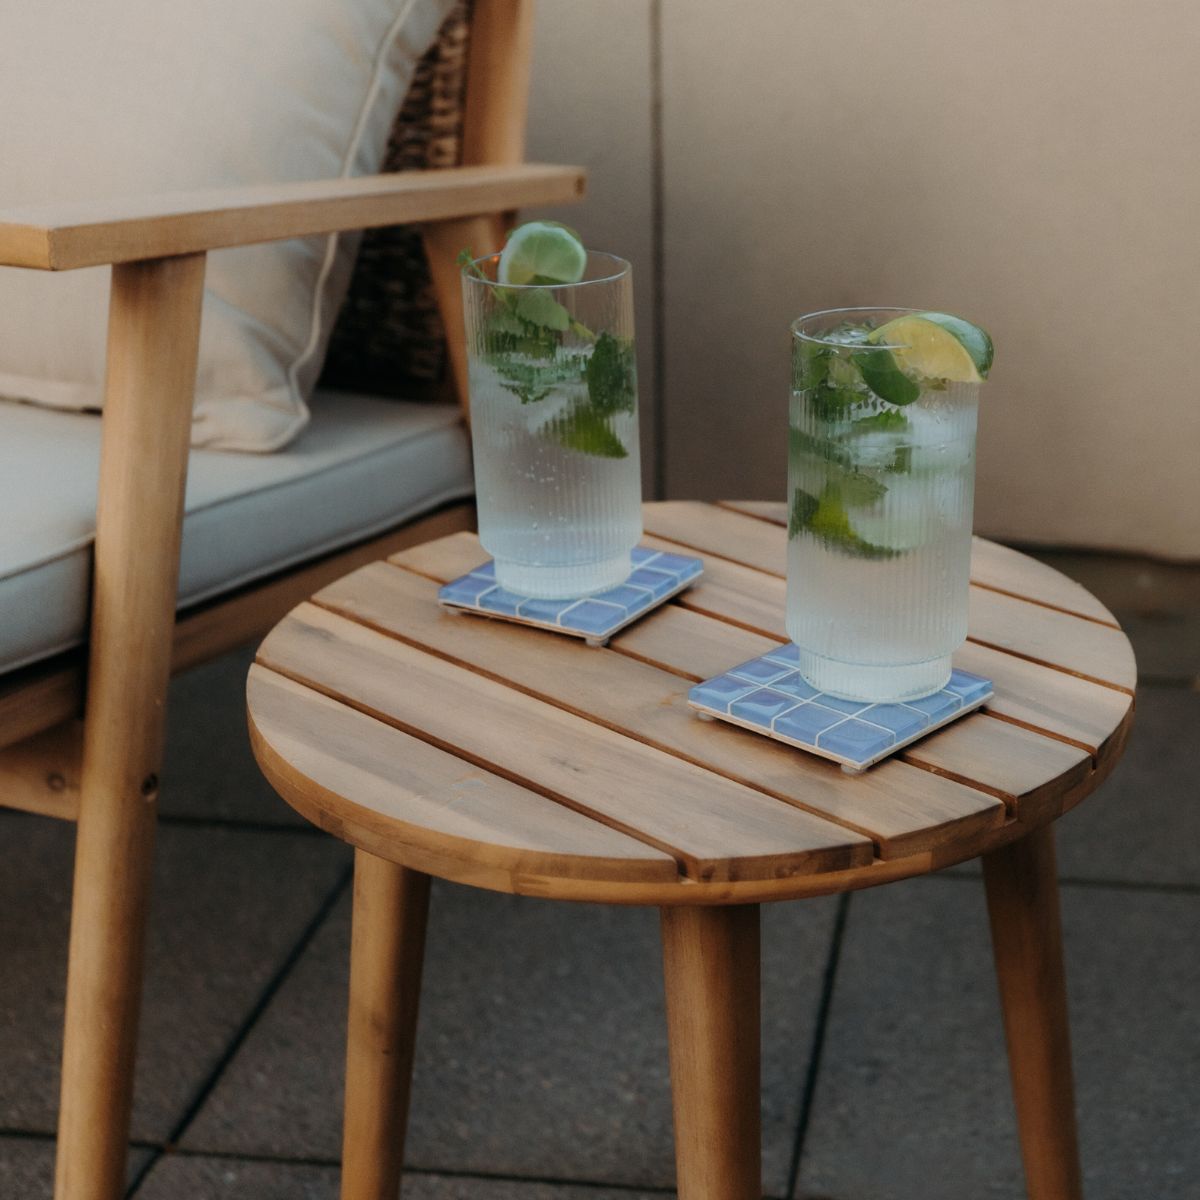 Sunny Days Small Coffee Table - Views Balcony Bar | Turn your Balcony into a Bar!